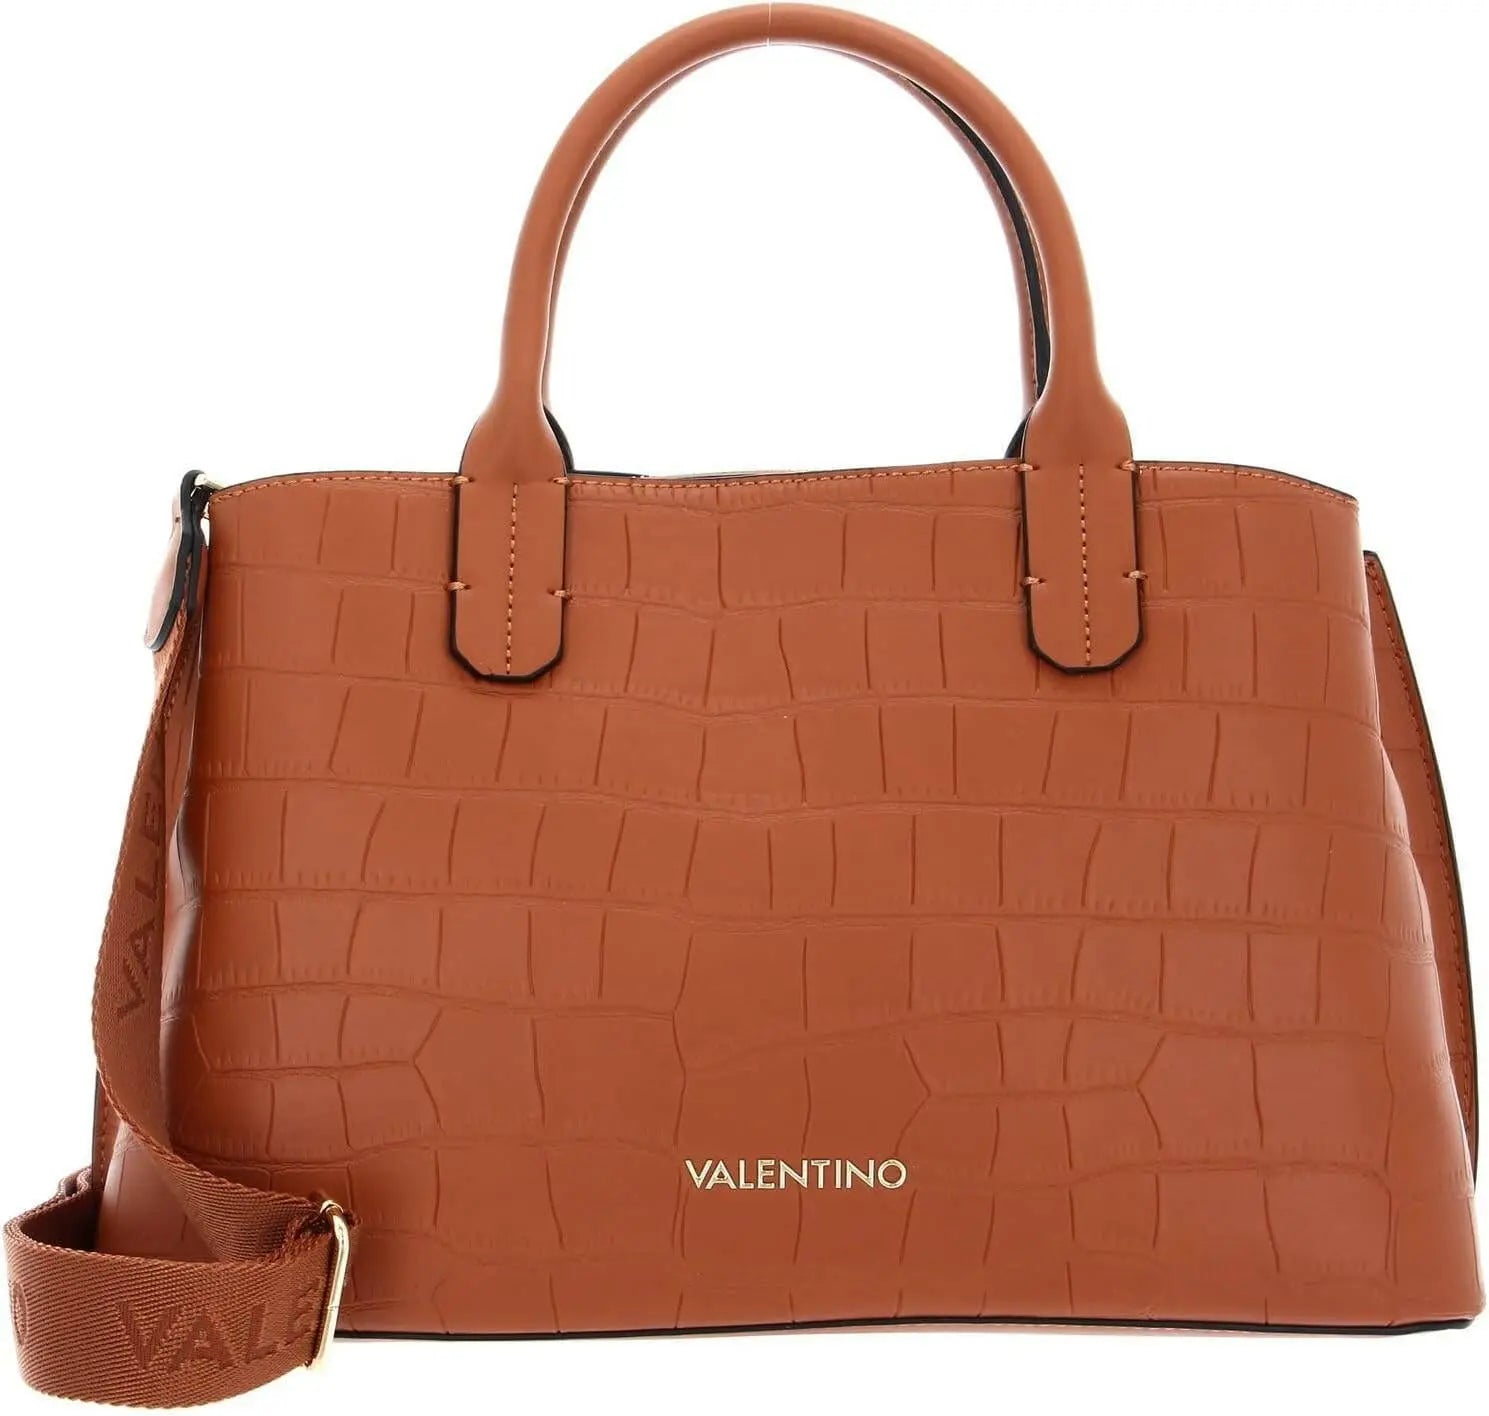 VALENTINO Women's Windy Shopping Bag